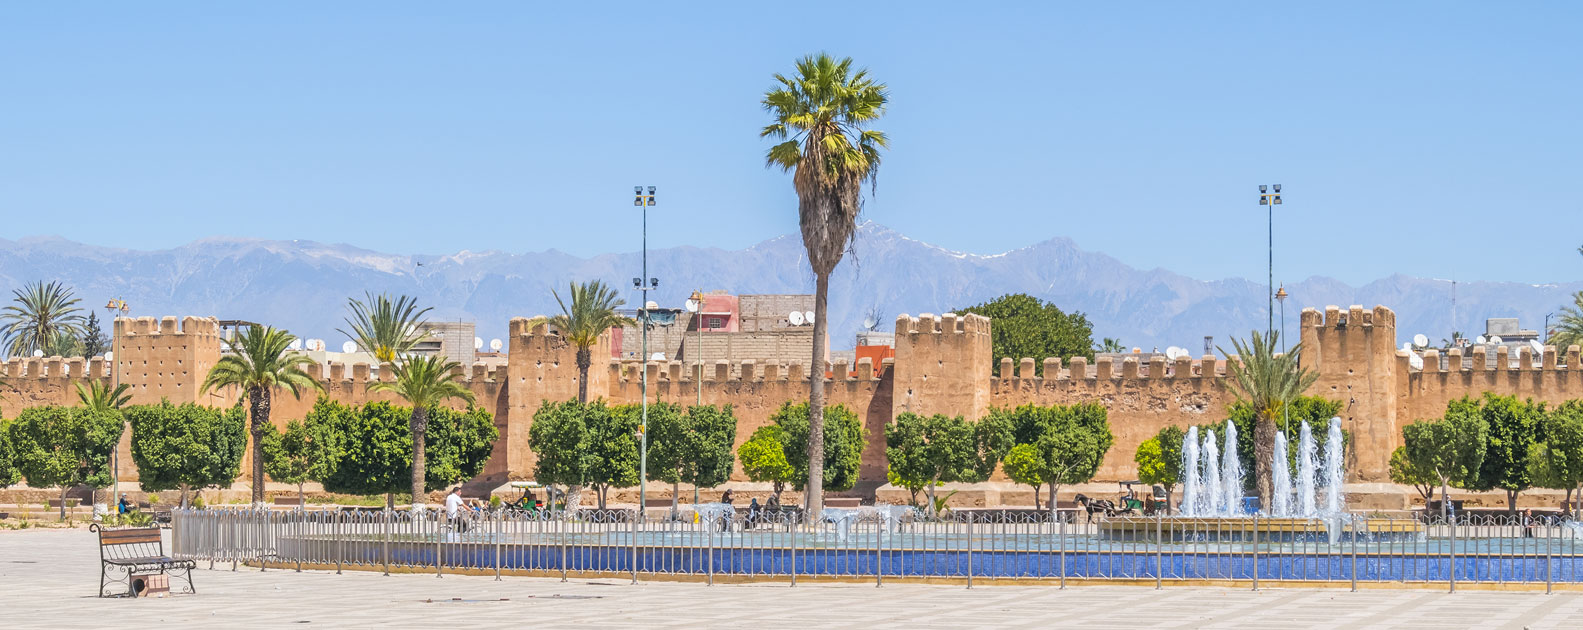 Taroudant, lilla marrakech